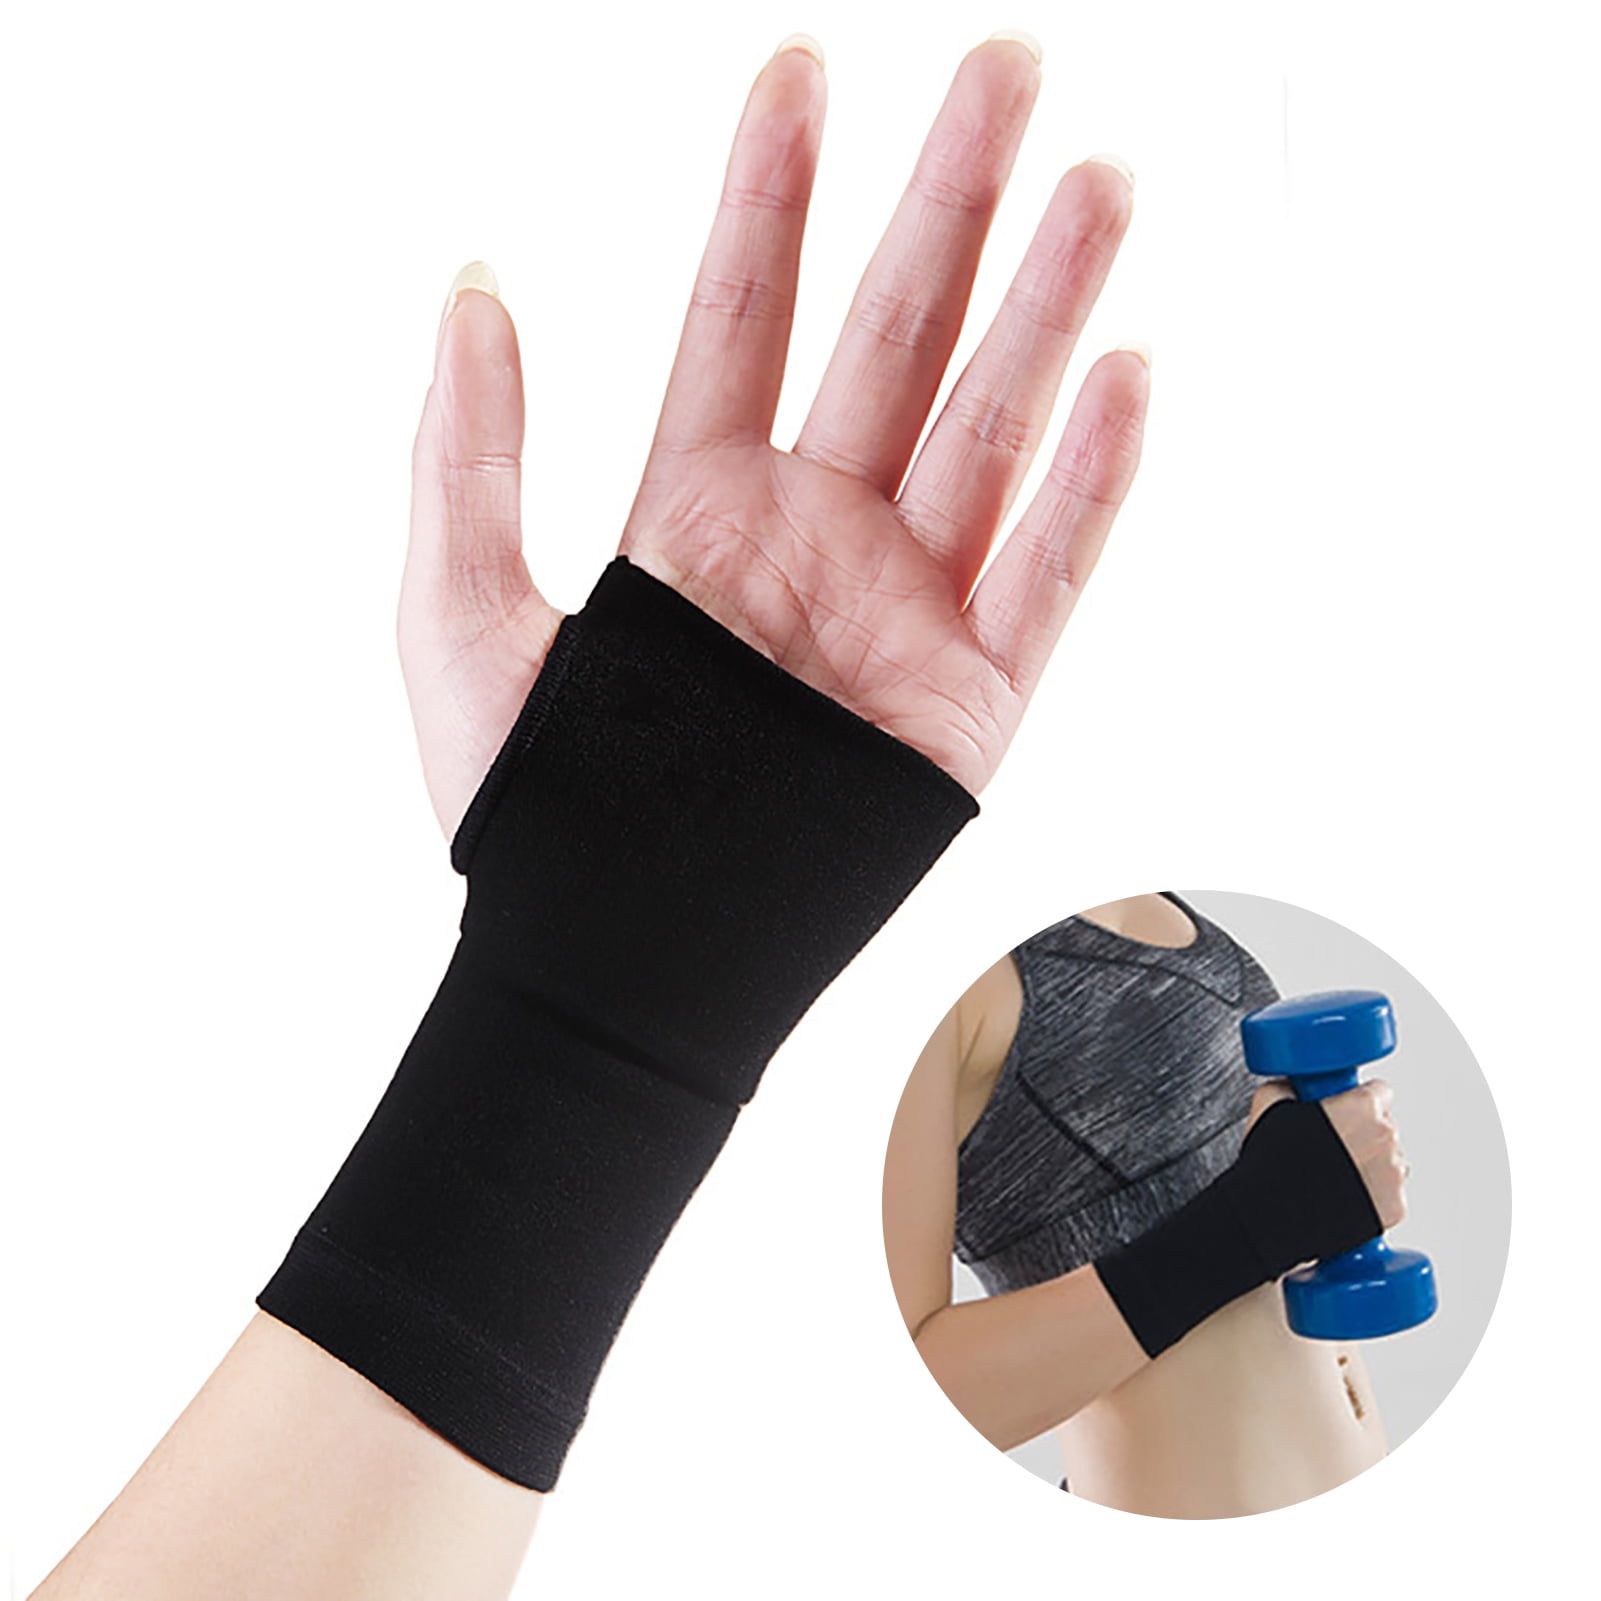 Wrist Support Deluxe Washable Unique Design for Extra Comfort Comfort Aid 